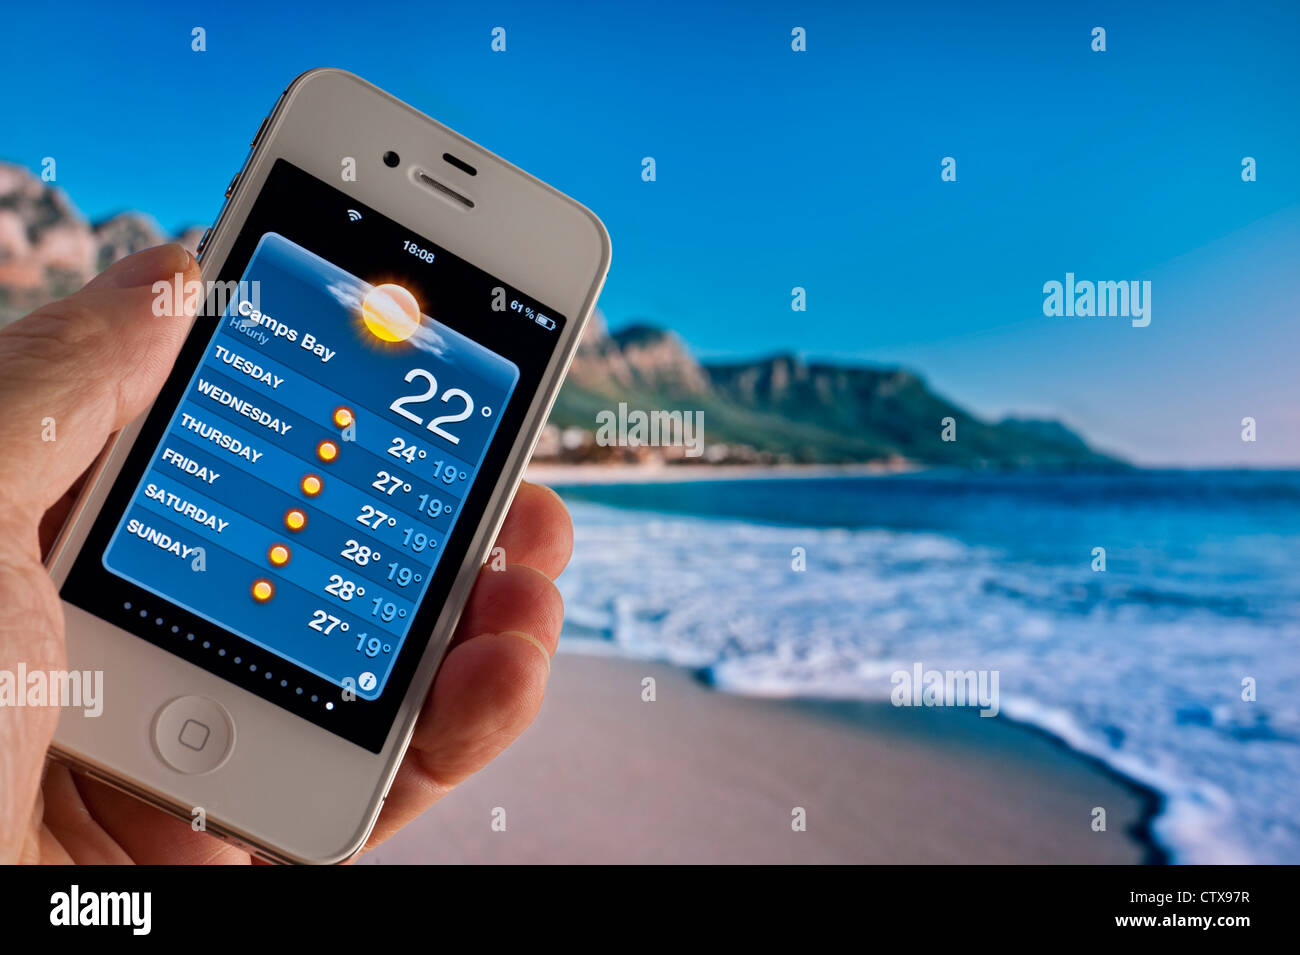 Apple iPhone 4s zeigt 22C Morgen Sonne bei Wettervorhersage Bewerbung bei Camps Bay Kapstadt Südafrika Stockfoto